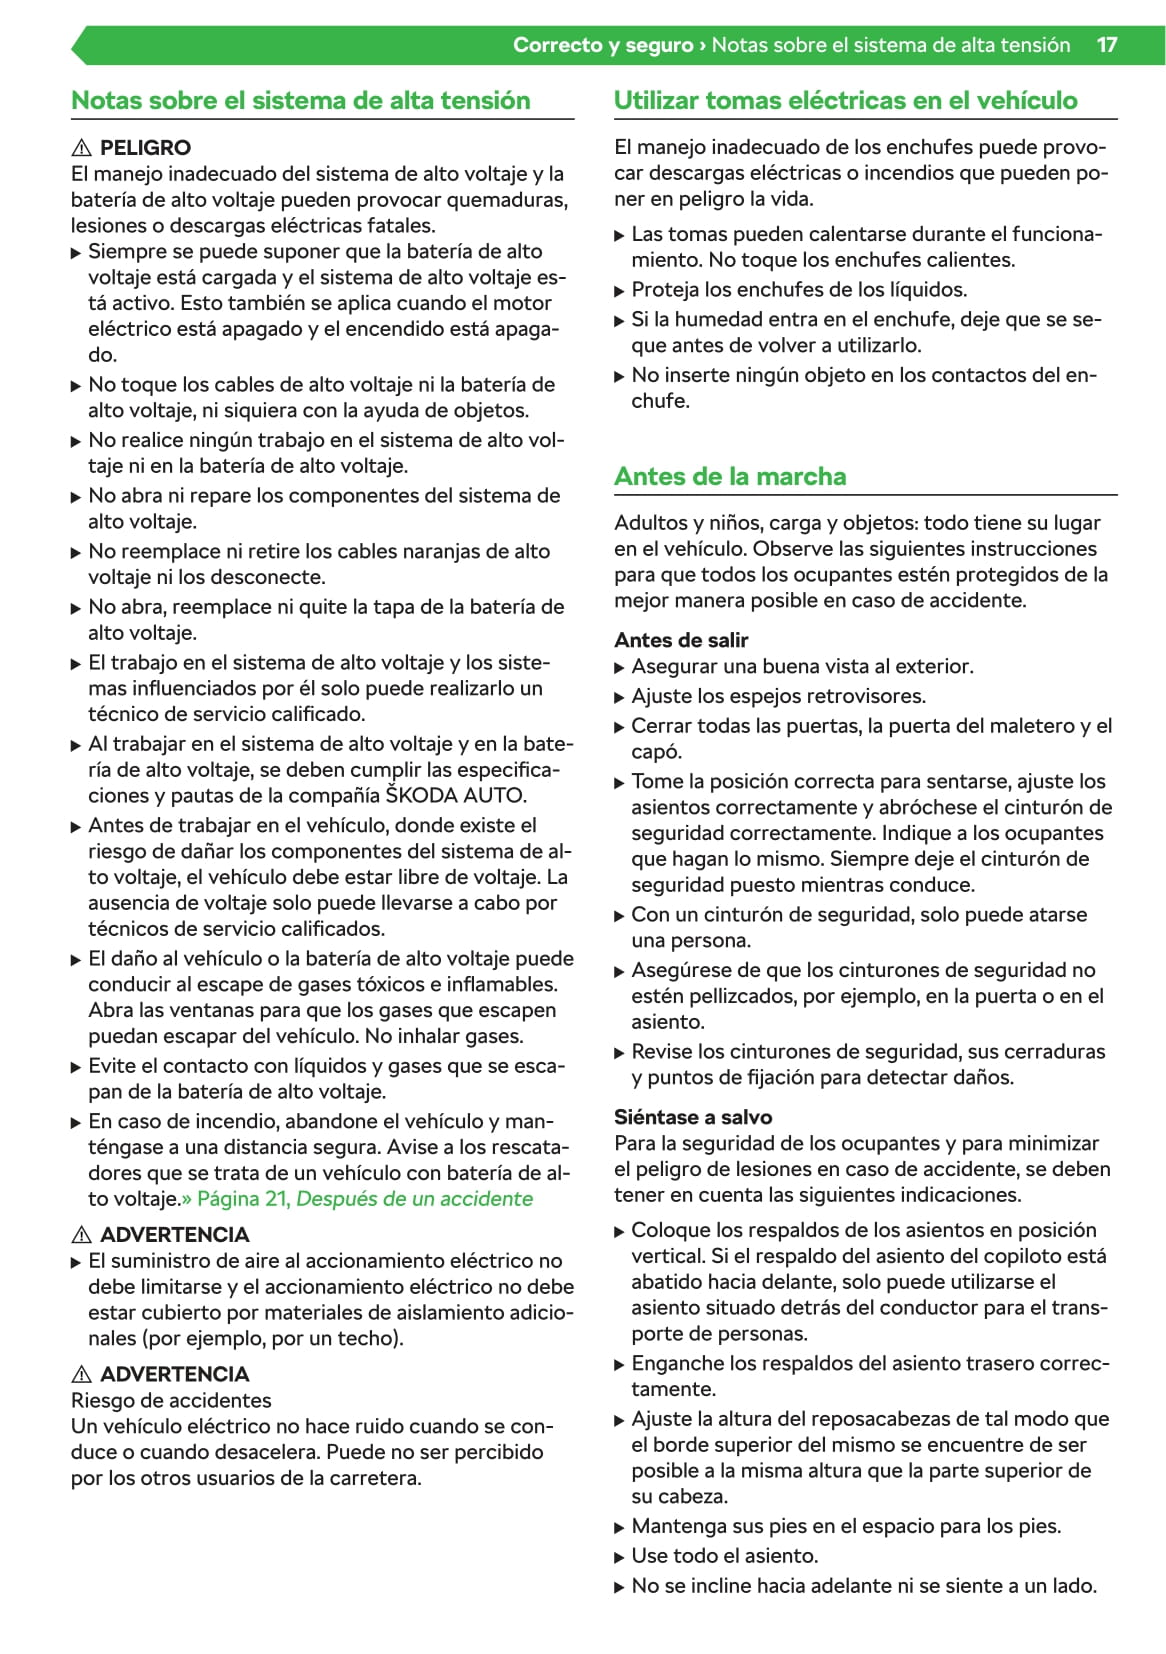 2019-2020 Skoda Superb iV Owner's Manual | Spanish